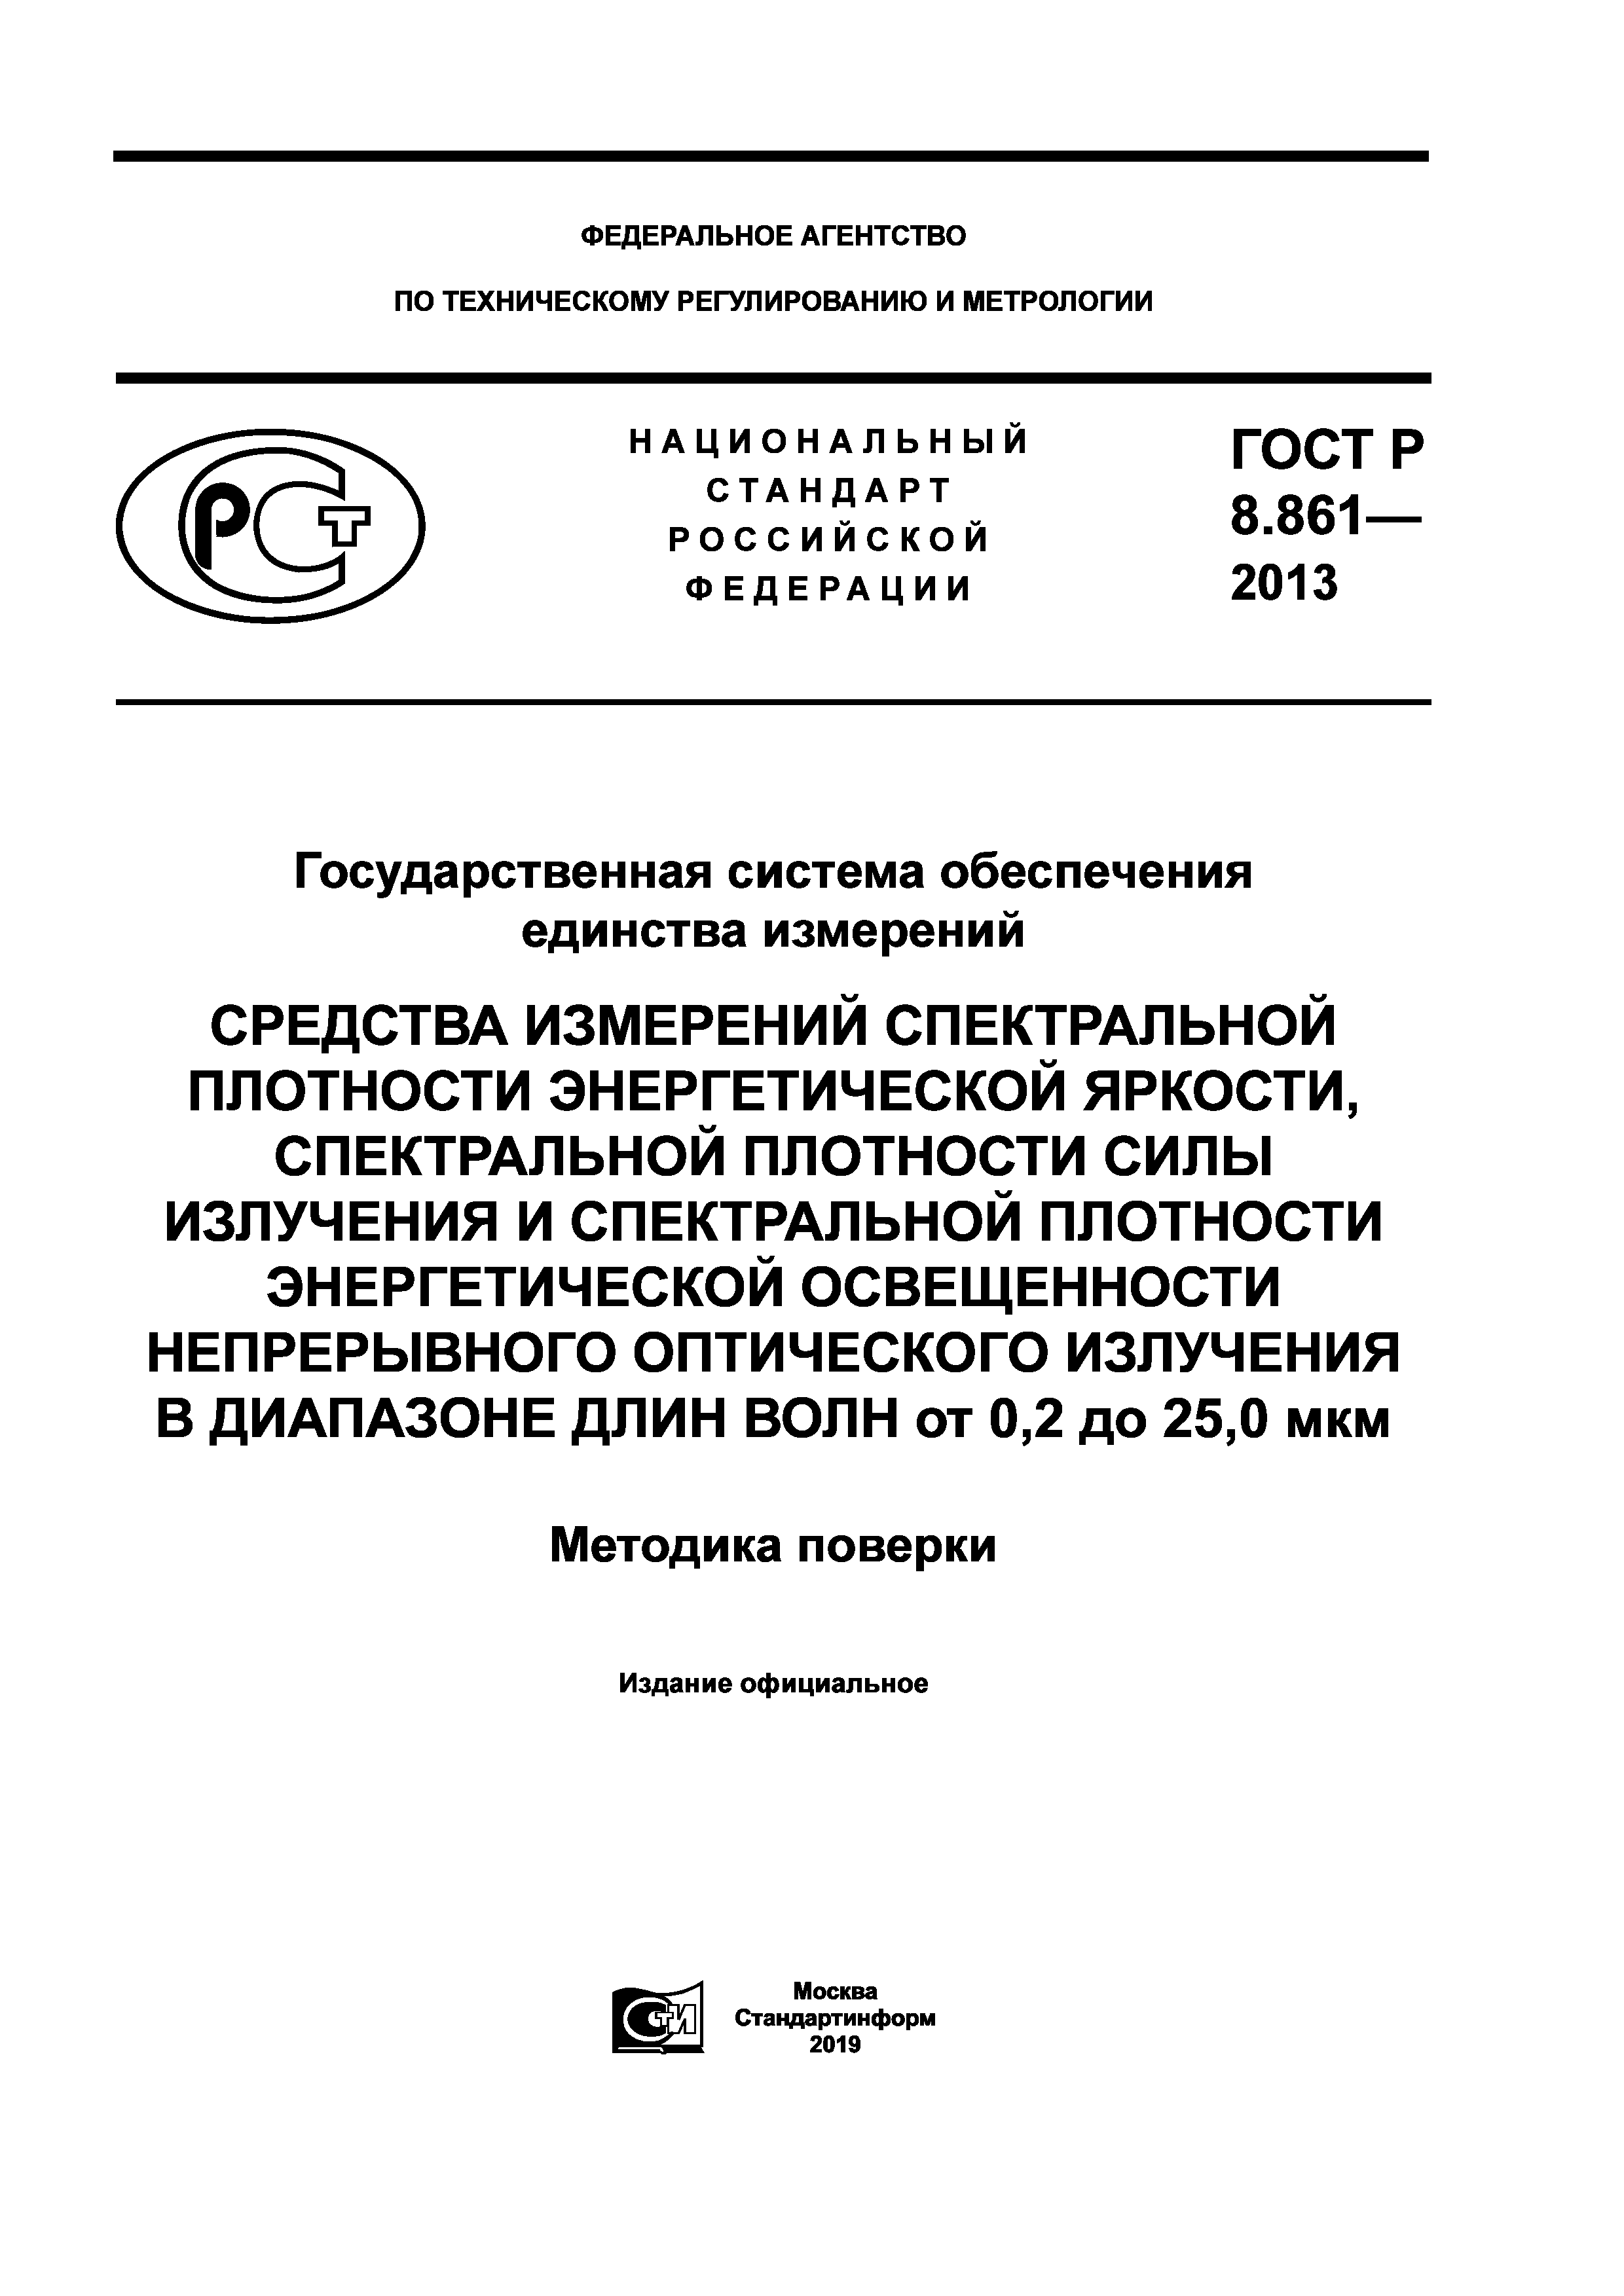 ГОСТ Р 8.861-2013